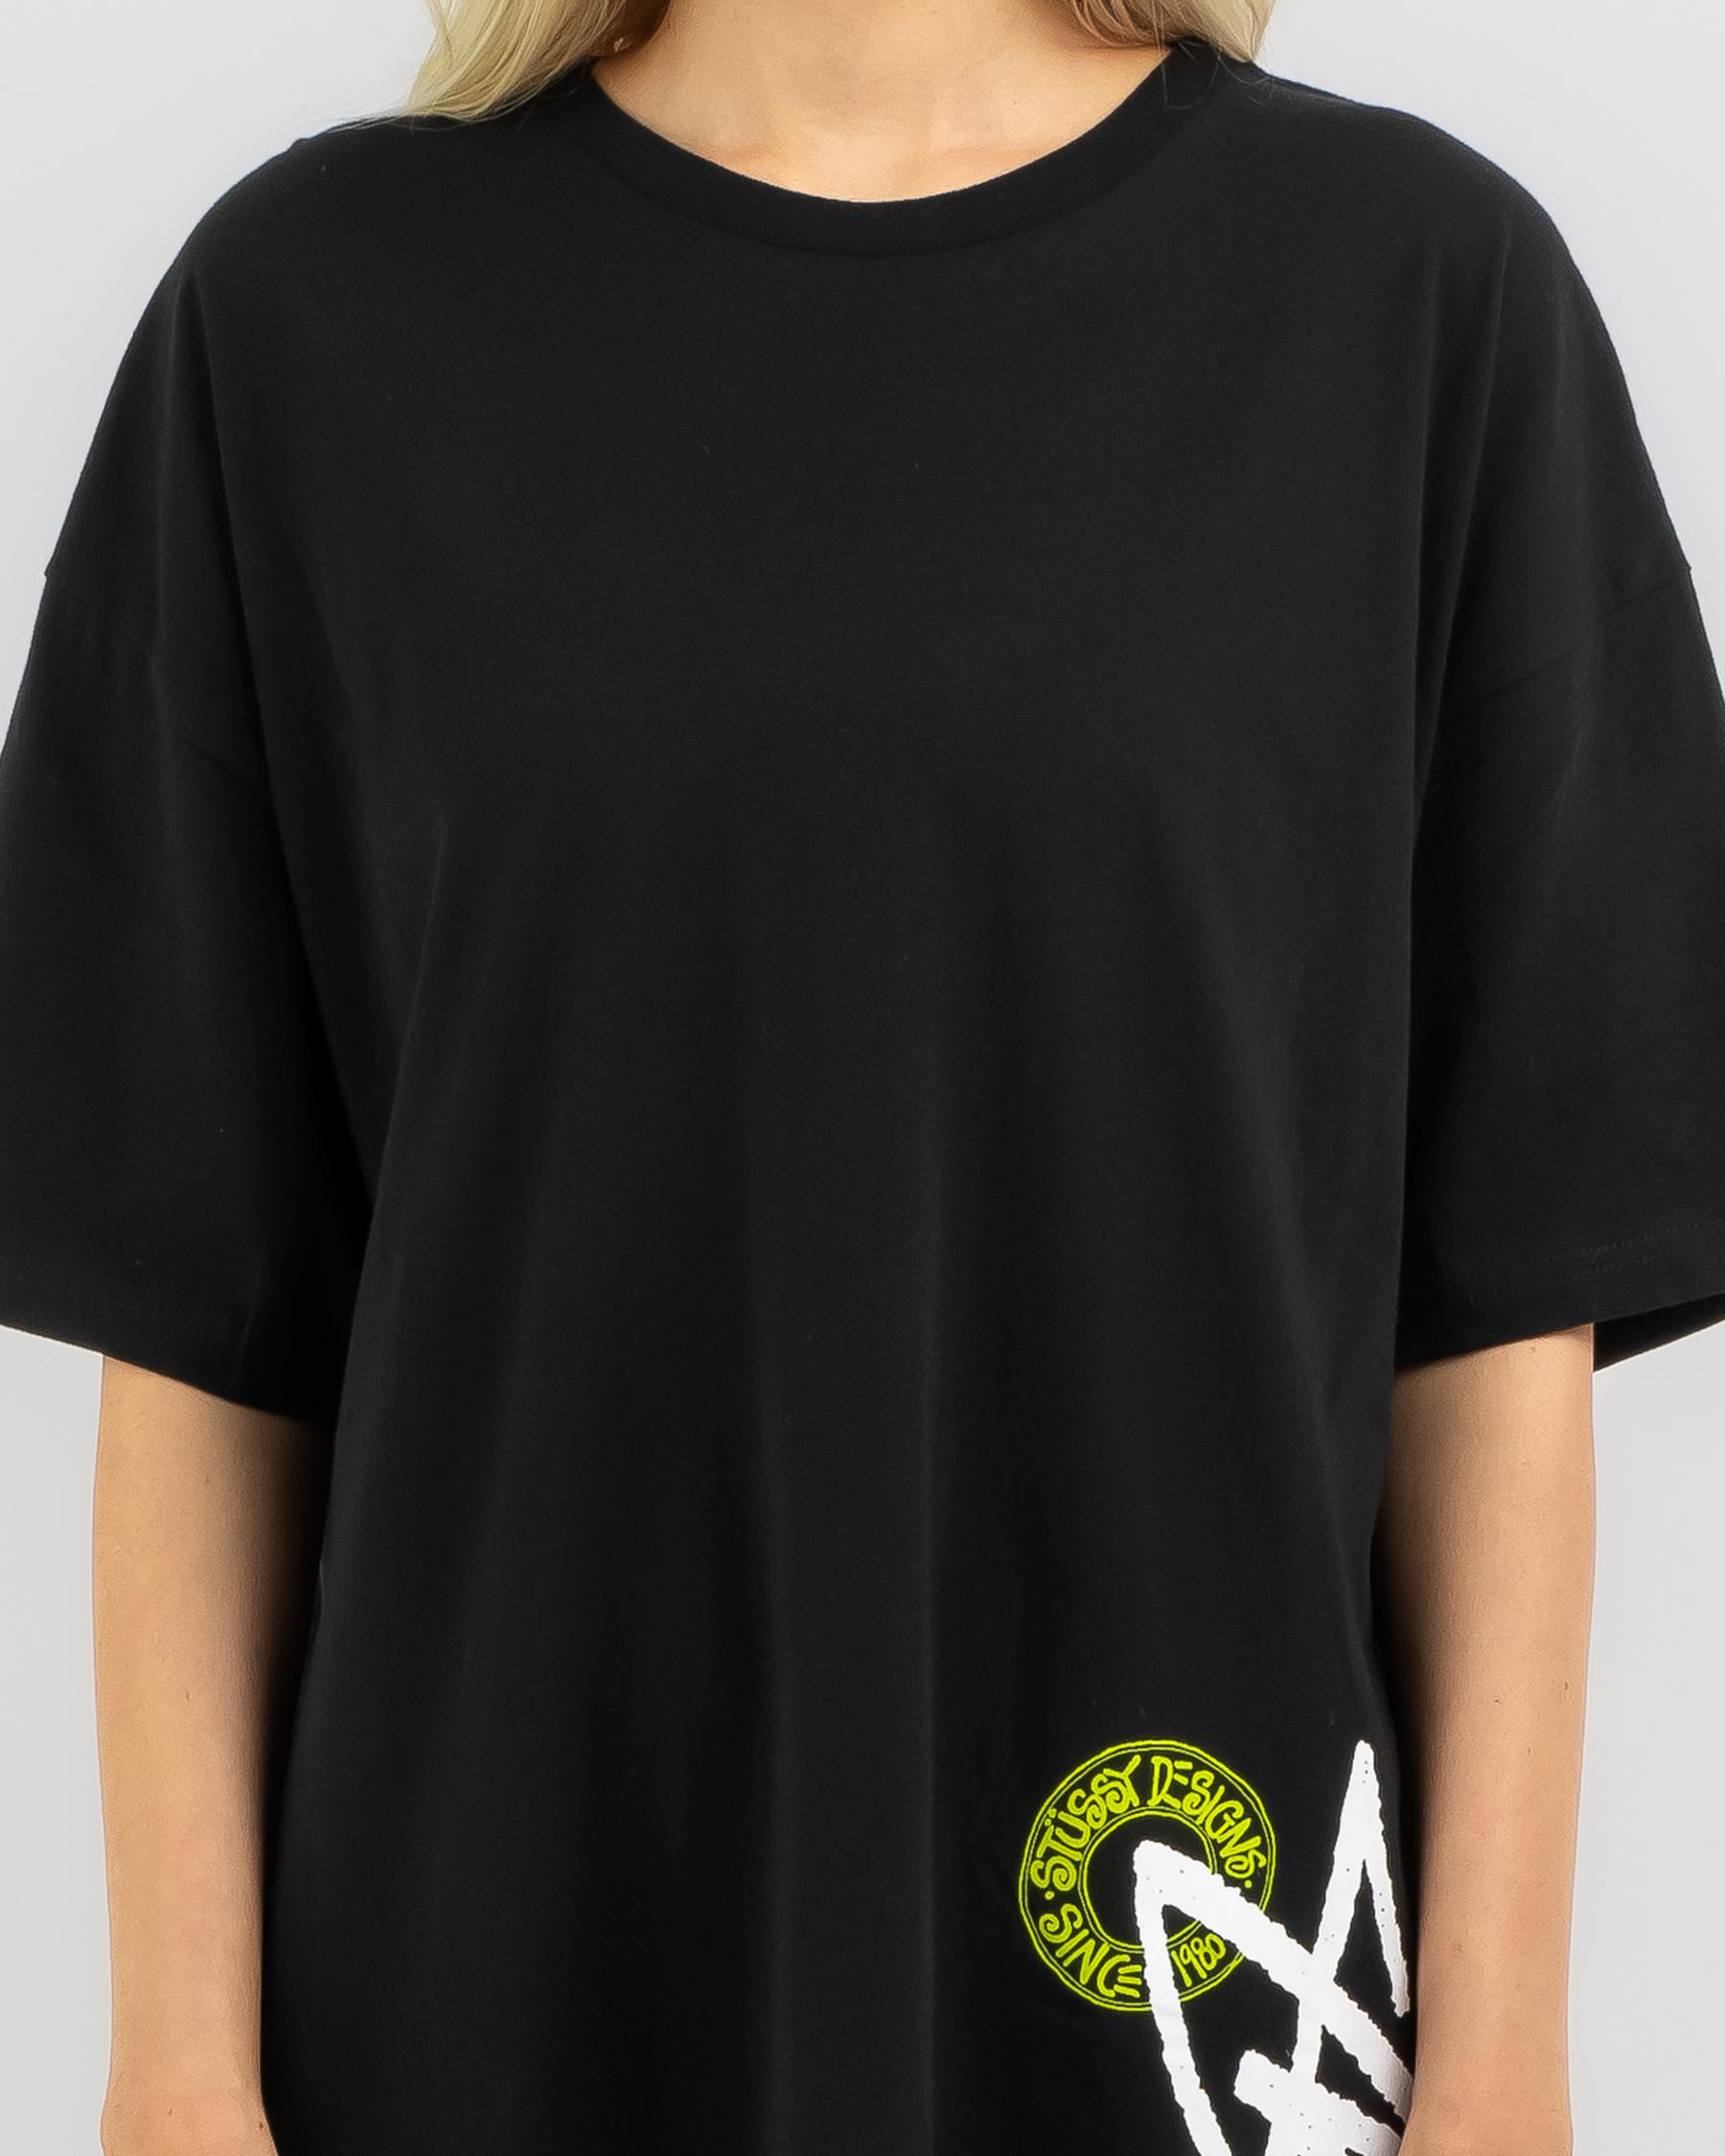 Shop Stussy Design Dot T-Shirt Dress In Black - Fast Shipping & Easy ...